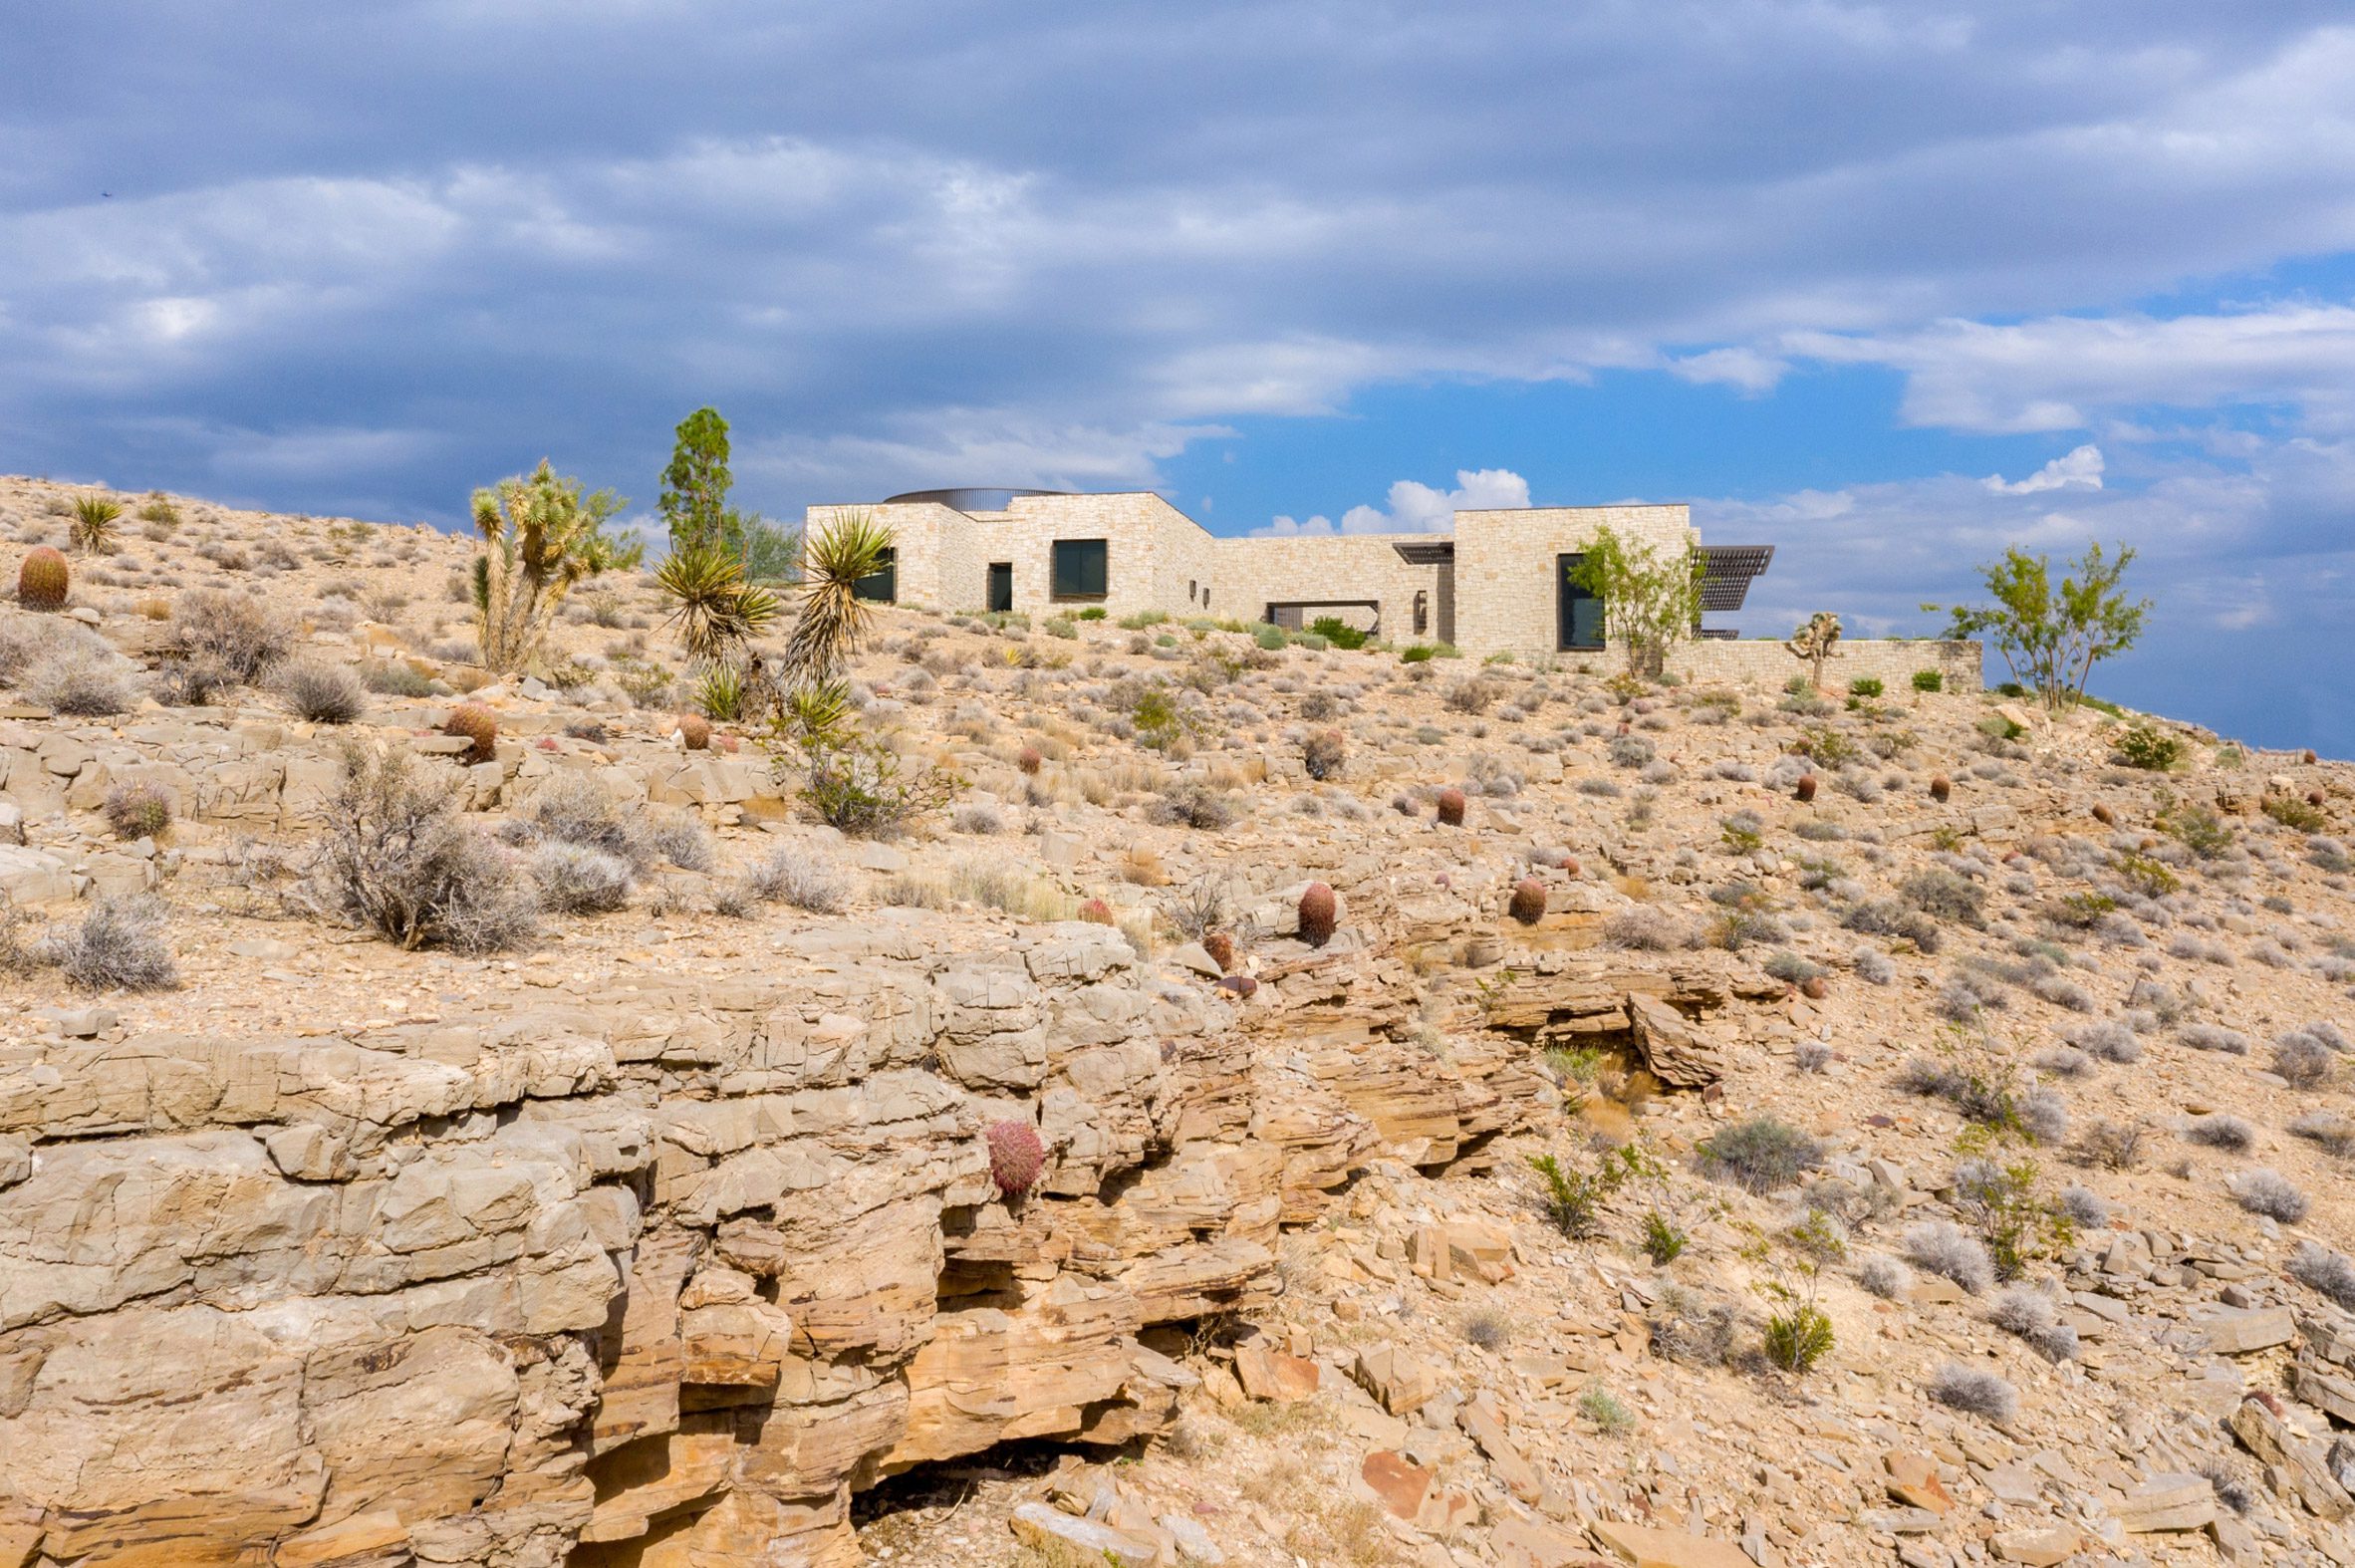 Facade of stone house placed on rocky hillside of Las Vegas desert